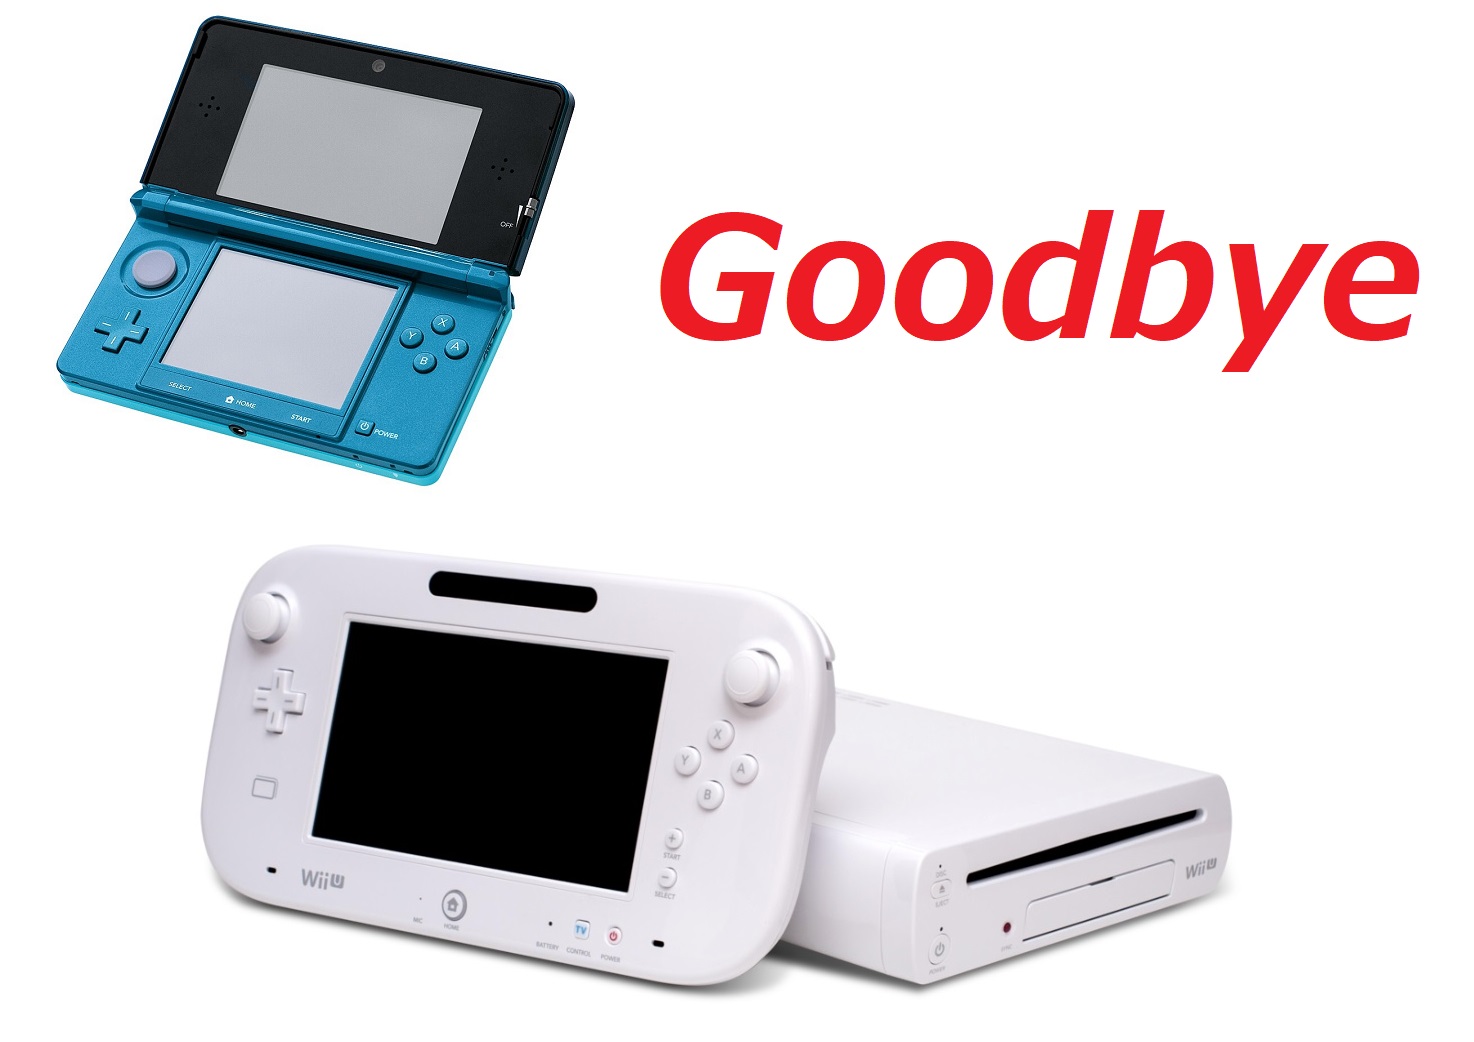 Category:Virtual Console games (Wii U, Nintendo DS), Nintendo